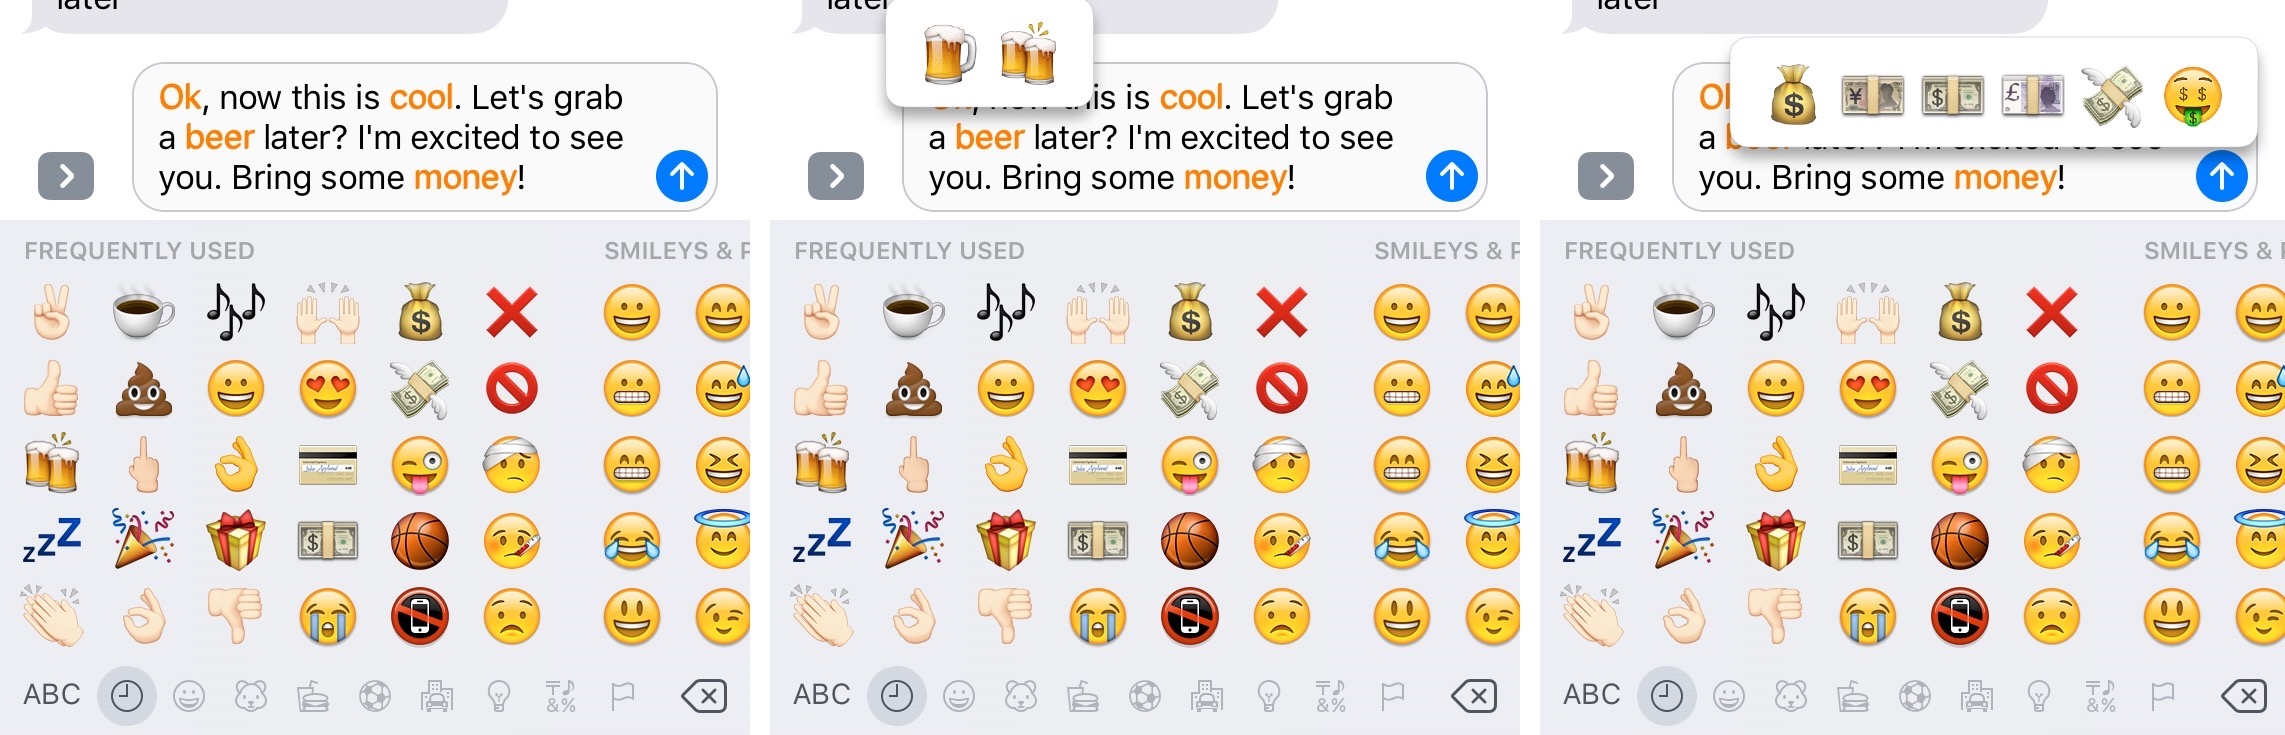 ios-10-messages-emoji.jpg